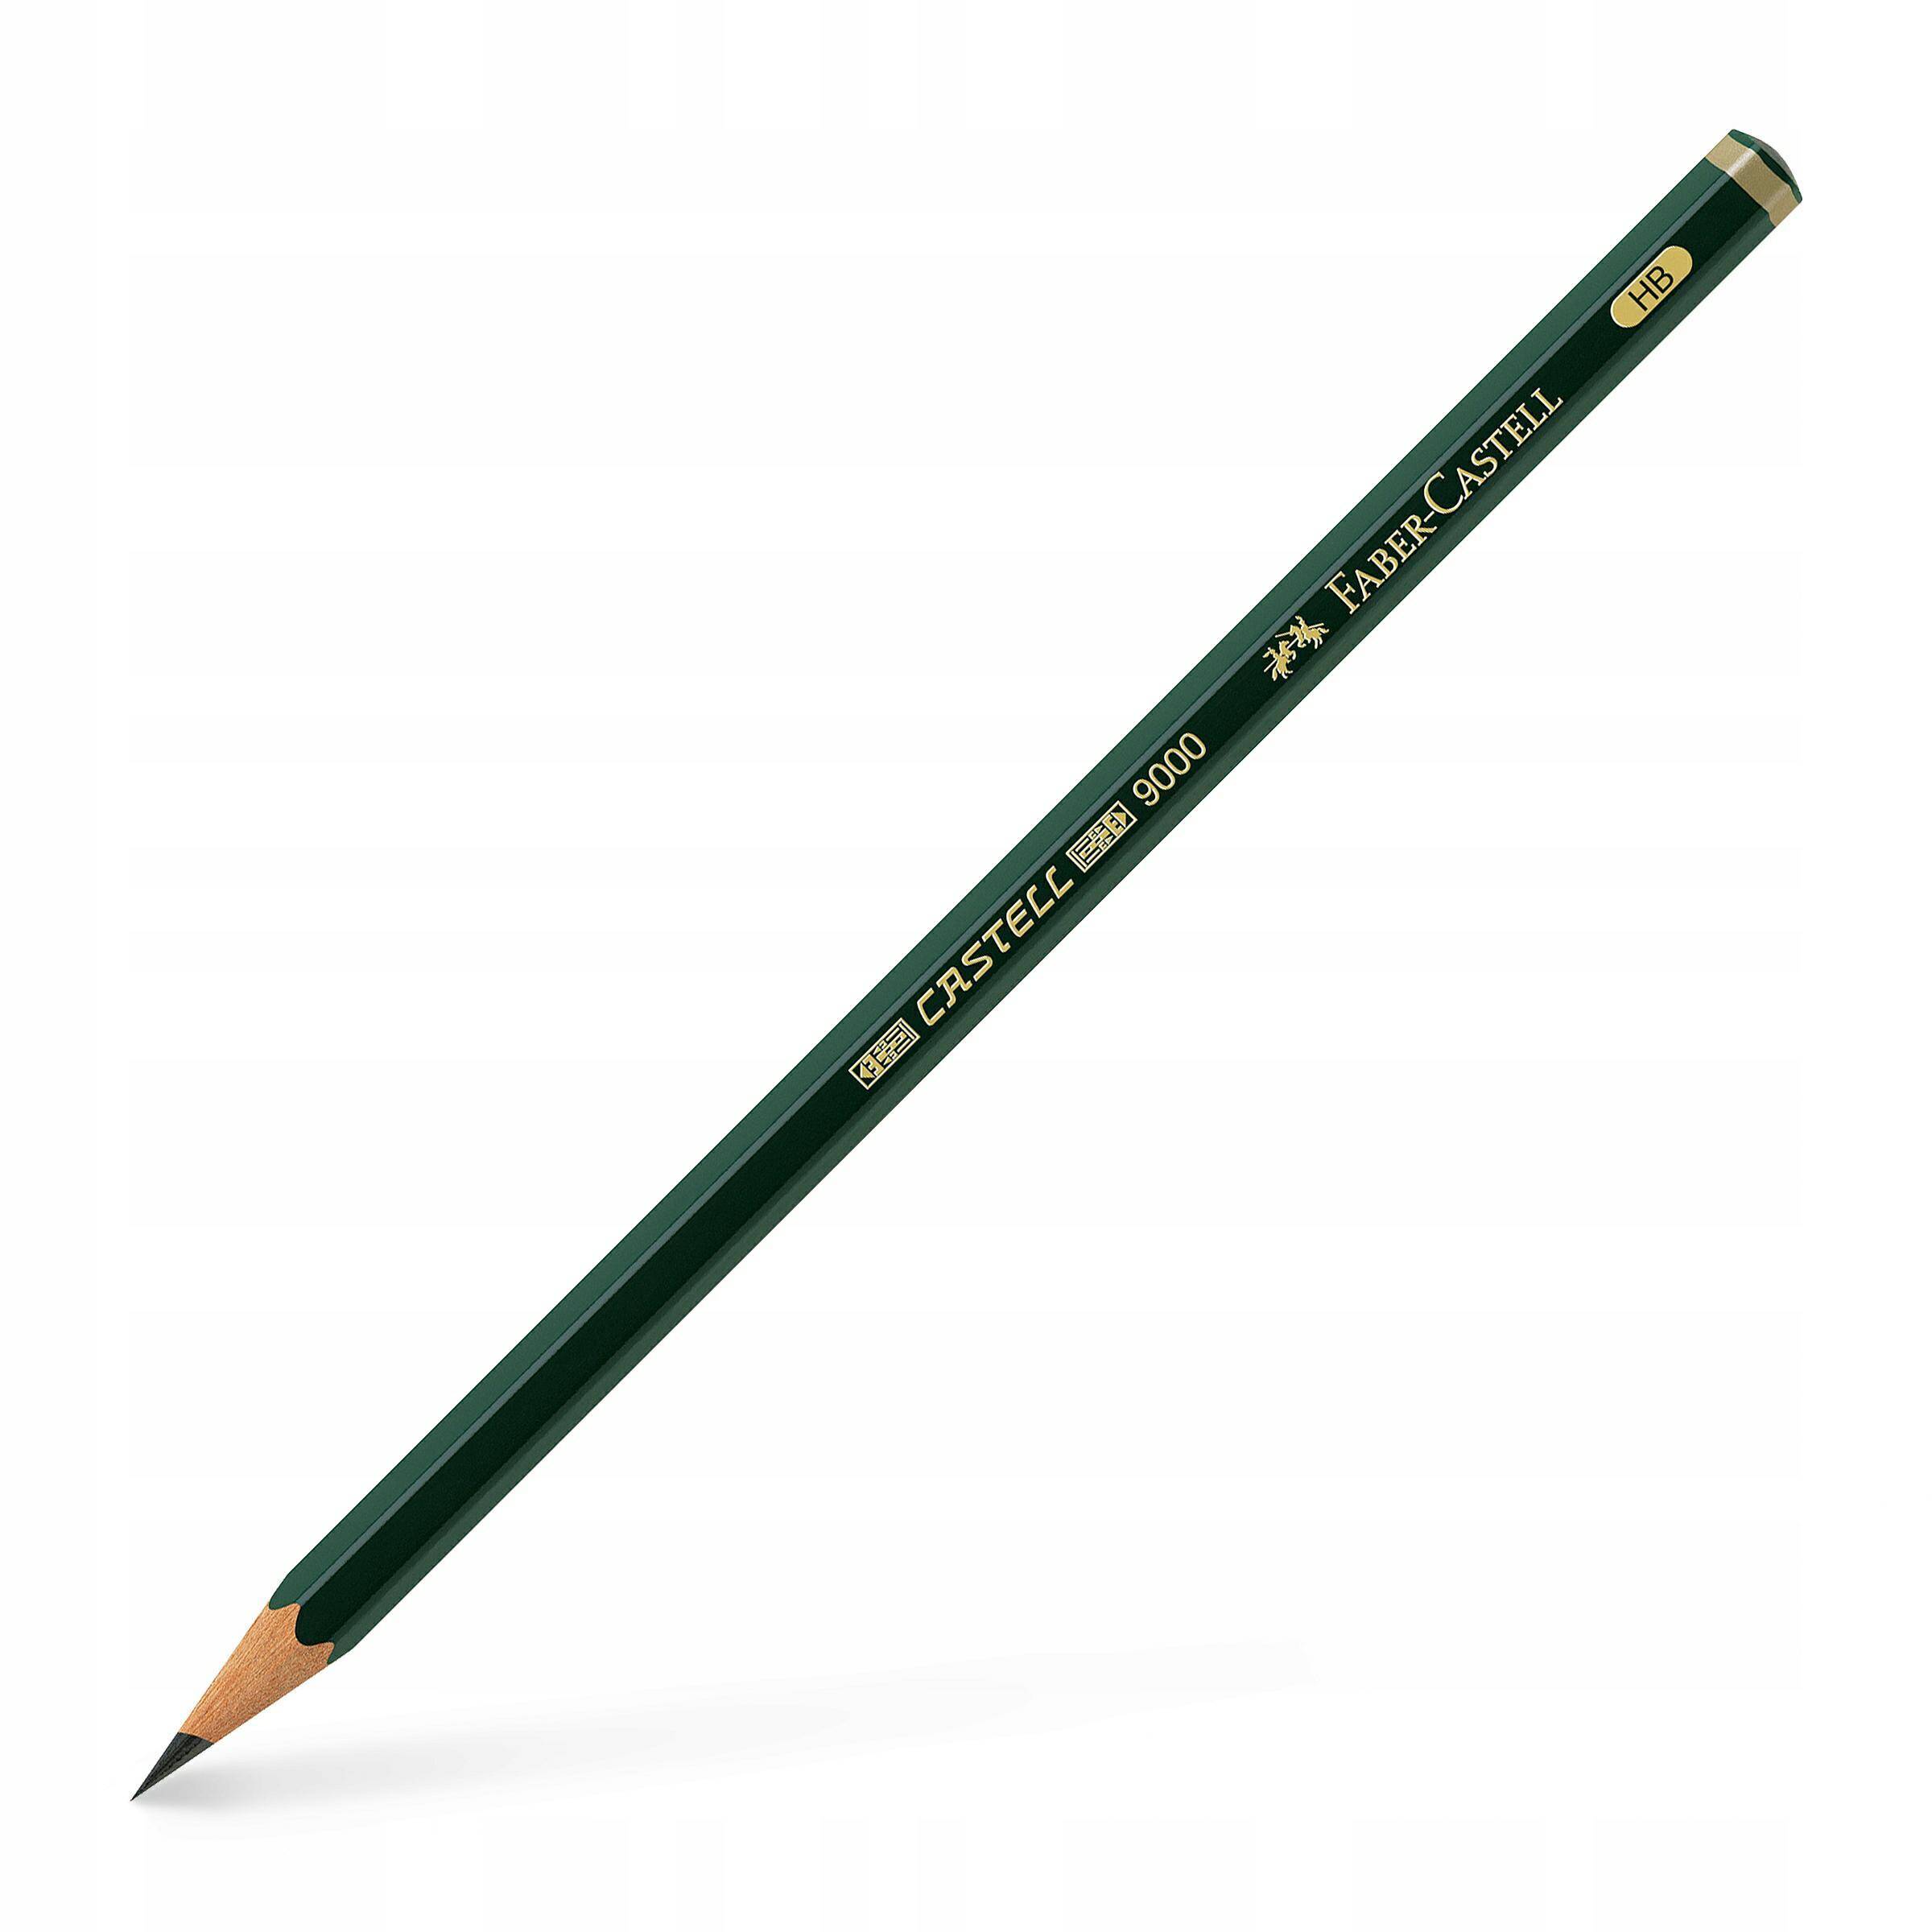 Ołówek 9000 HB Faber- Castell.